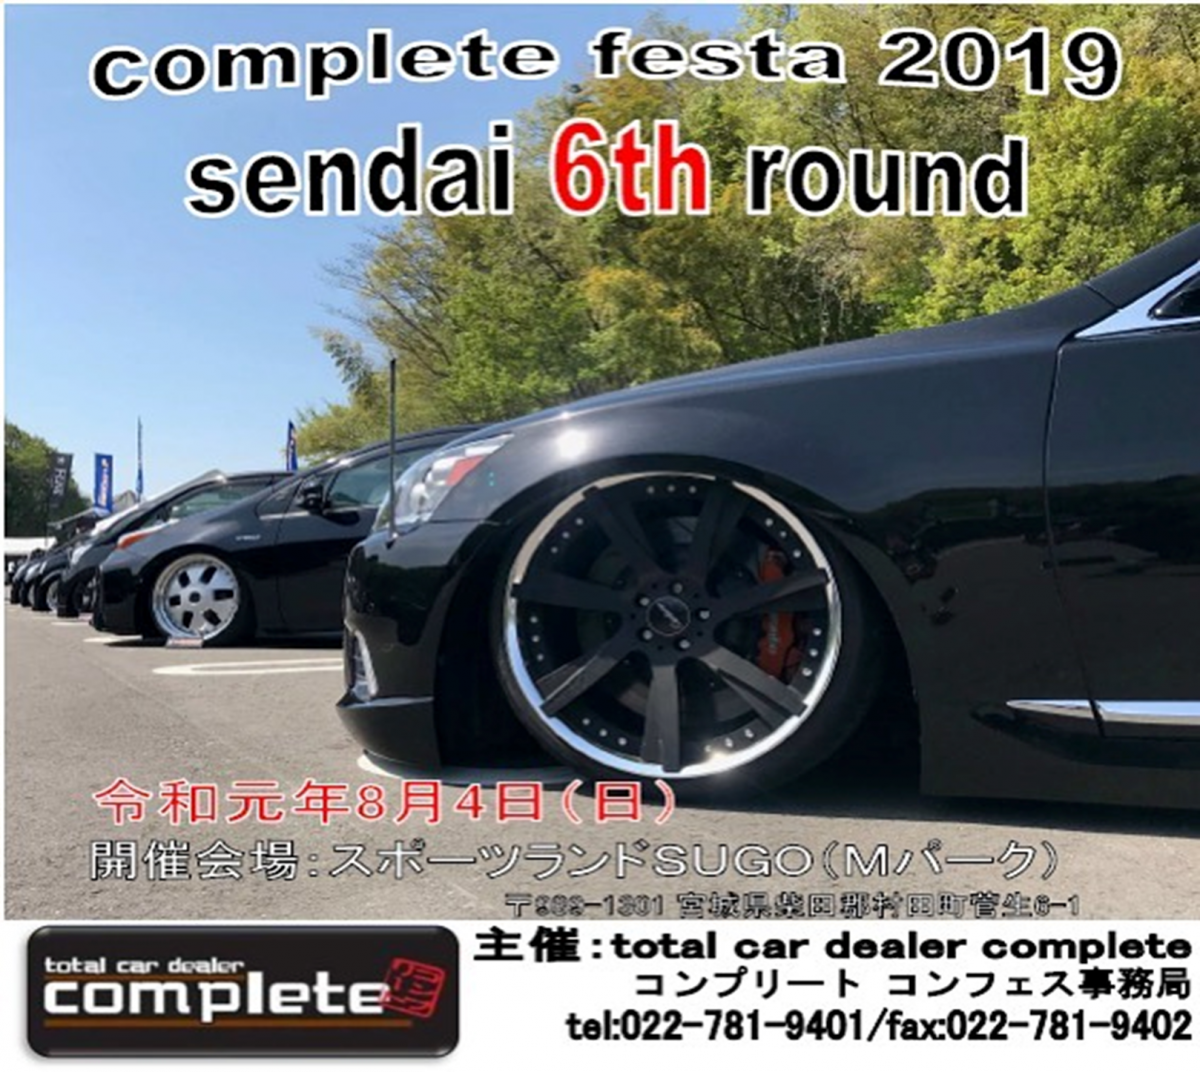 Complete Festa 2019 SENDAI 6th Round